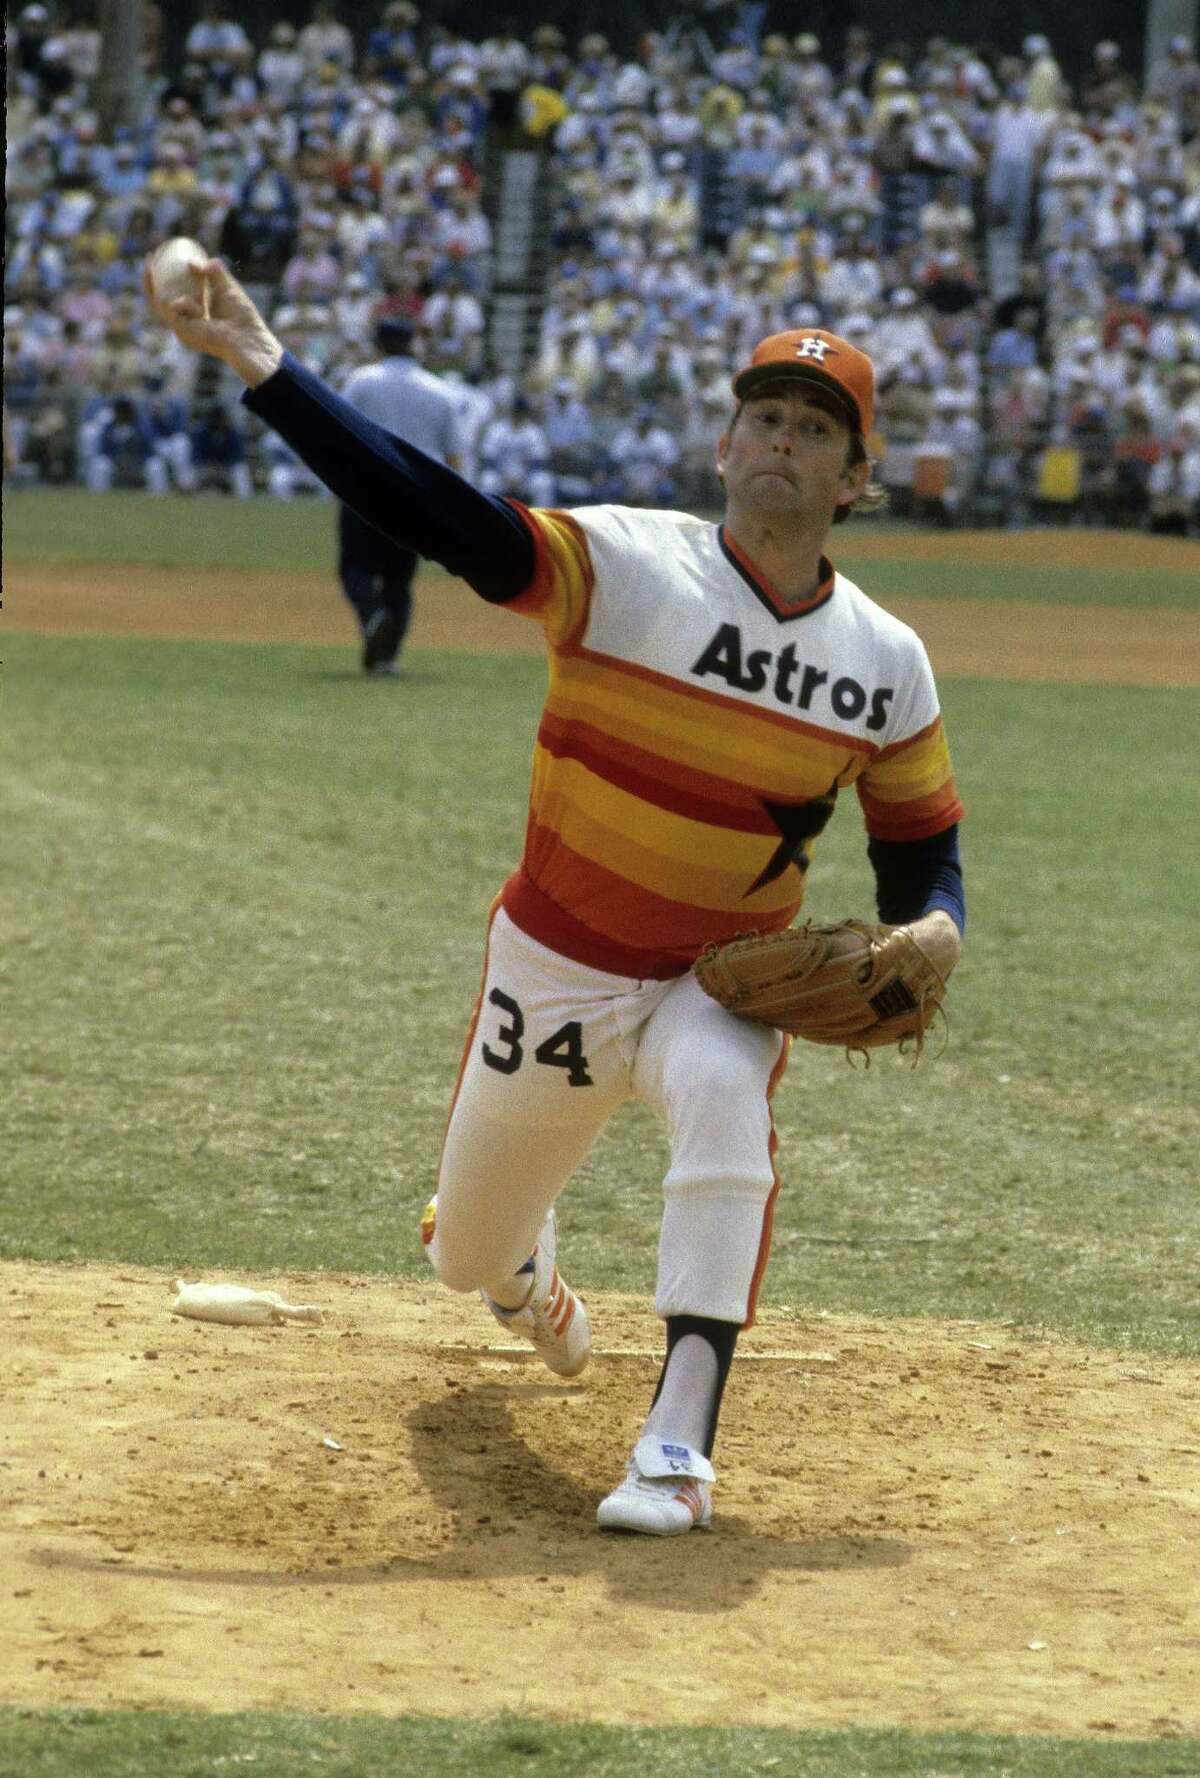 New Astros uniforms: Bring back the orange! - Ballpark Digest